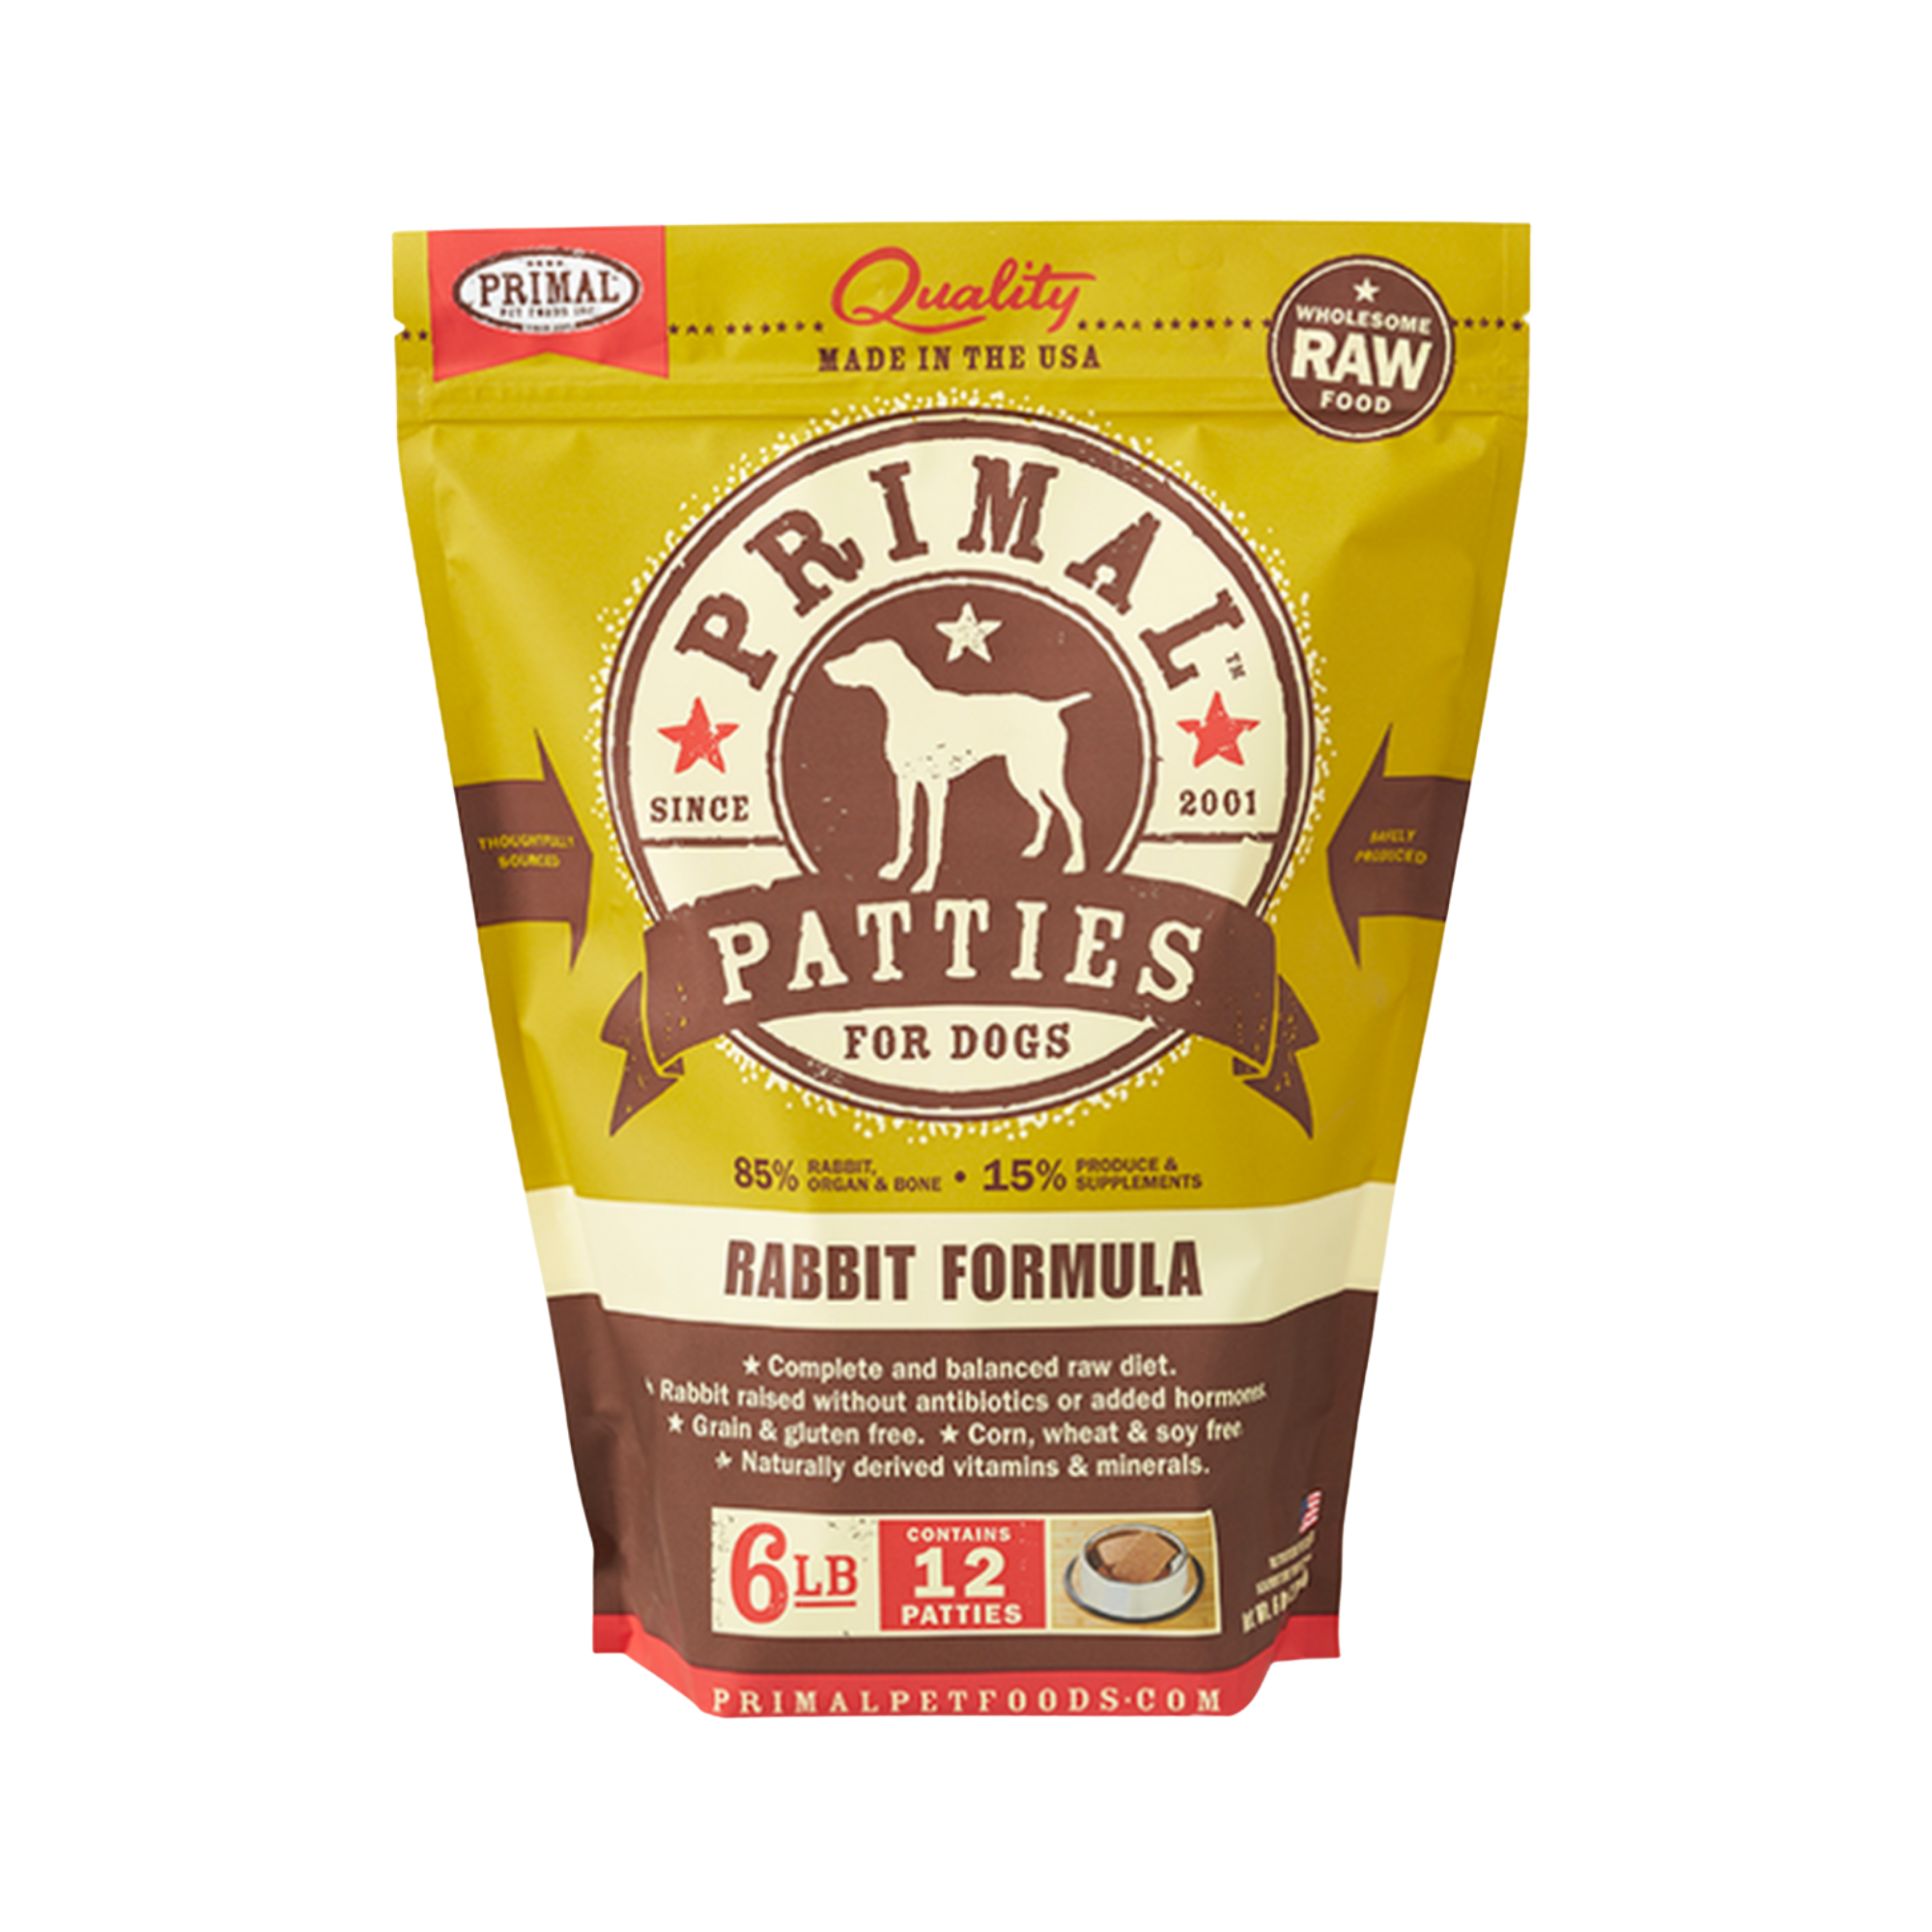 Primal Patties Rabbit Formula Frozen Raw Dog Food 6 lbs - Mutts & Co.